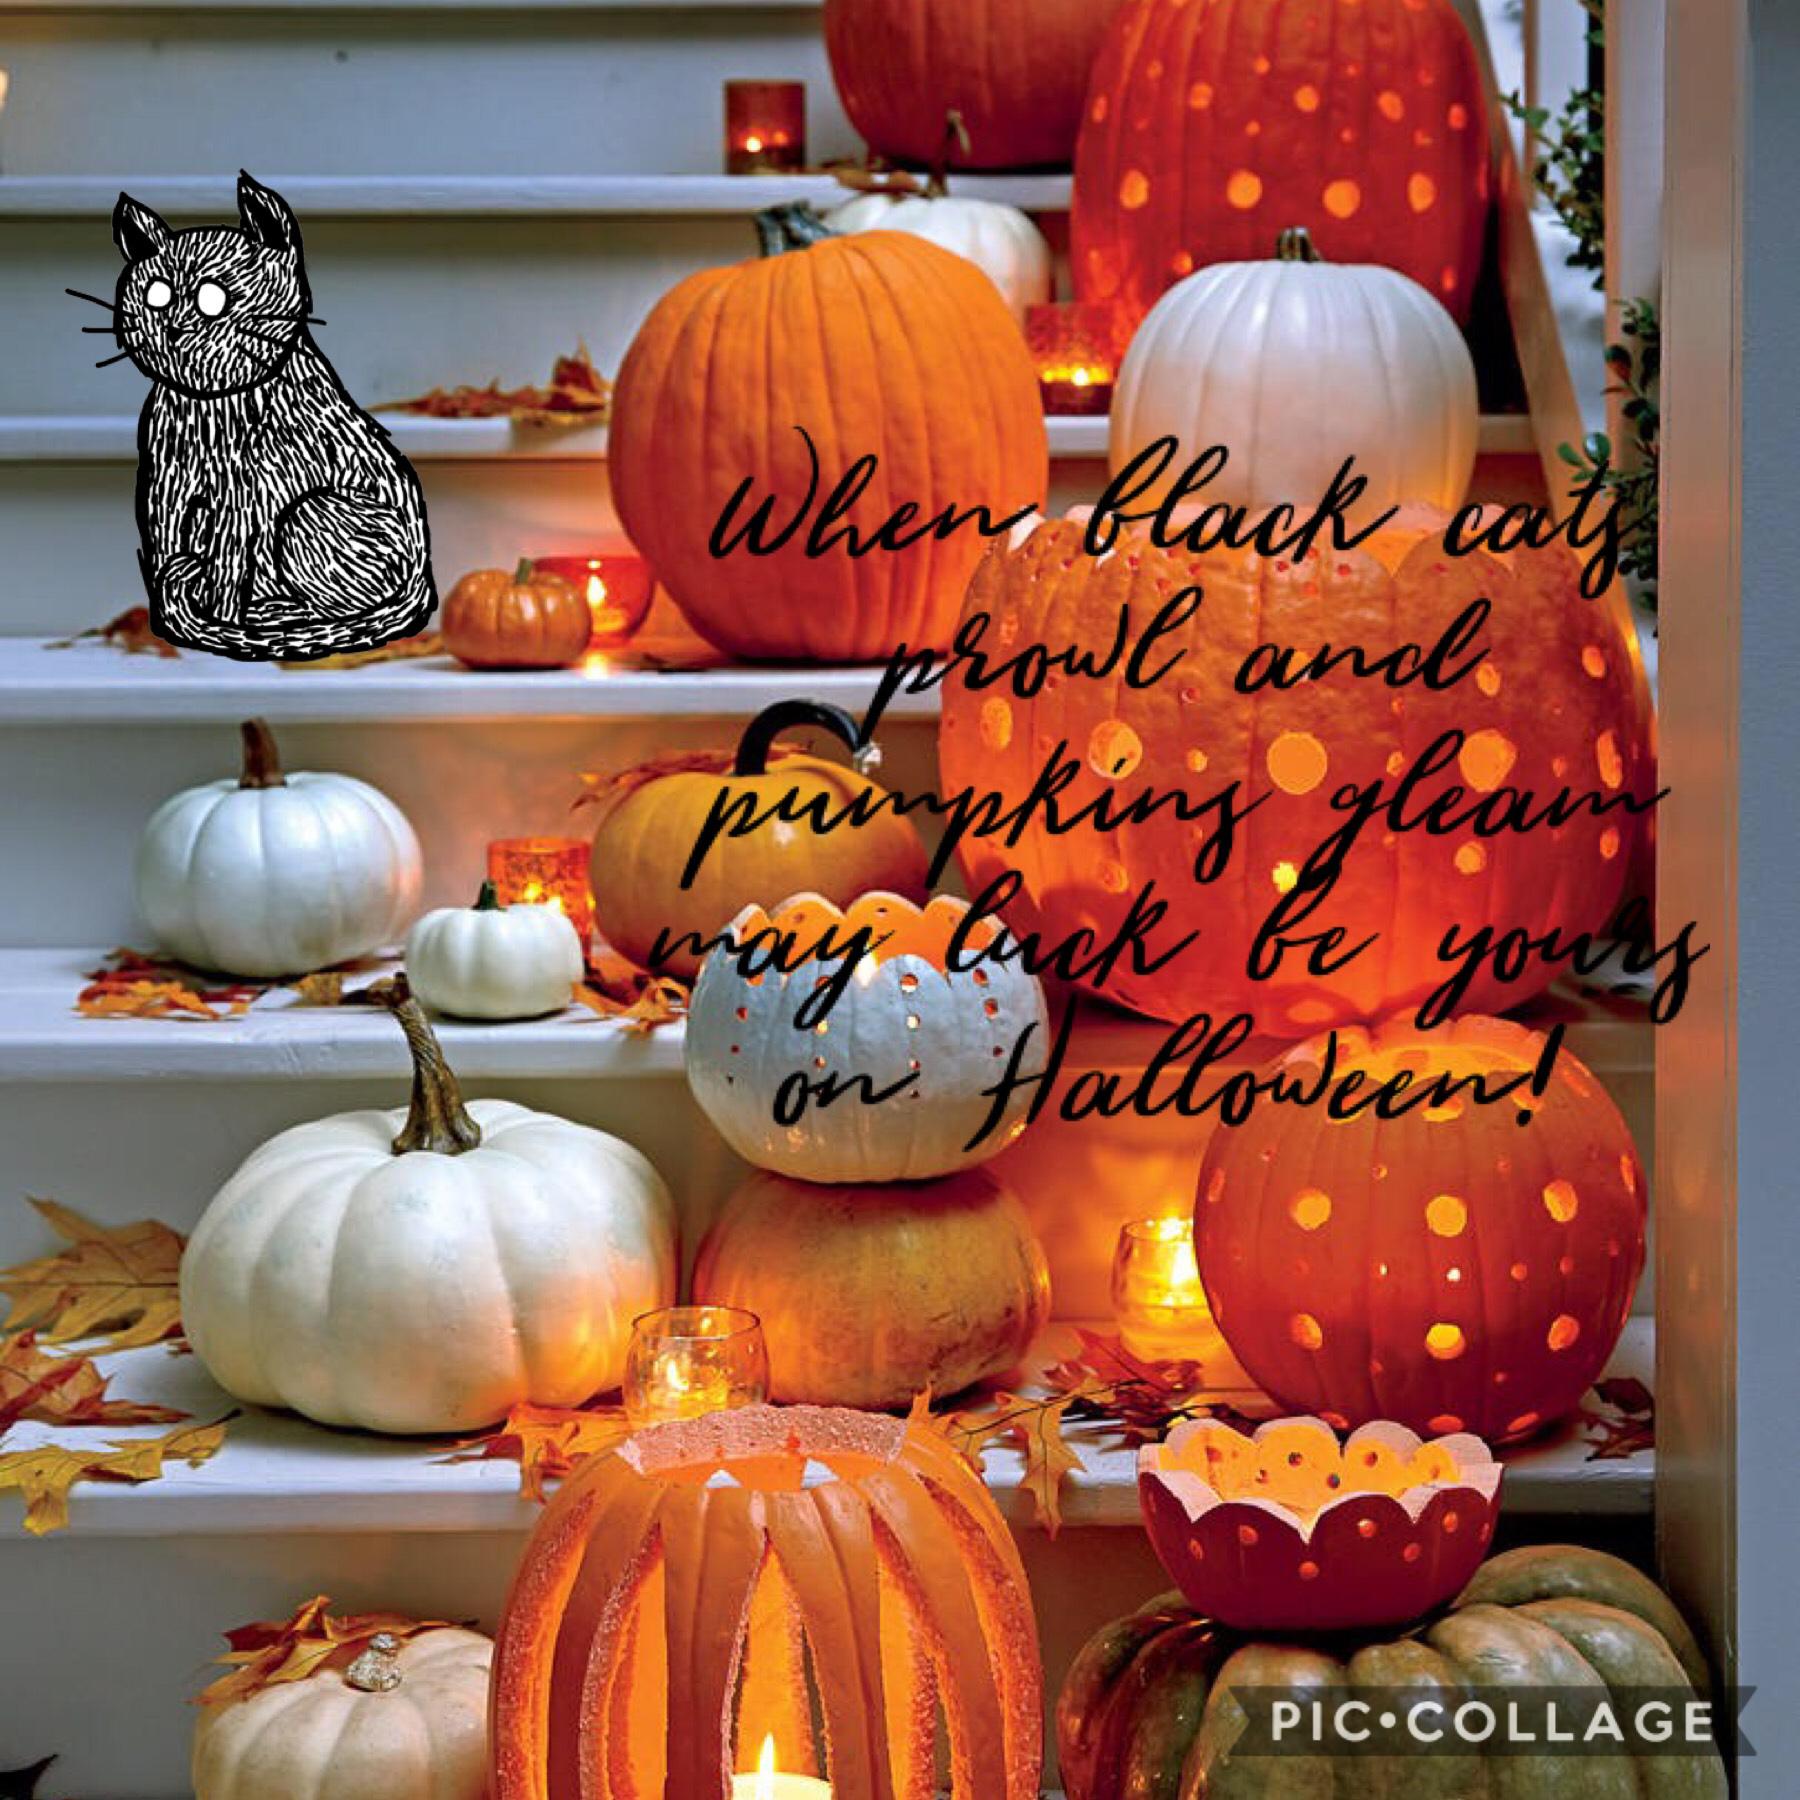 👻🎃Click Here!🎃👻
10/31/18
Hey guys! Happy Halloweeennnn!! I hope you guys enjoy and I hope you’ve all had a wonderful spooky season!